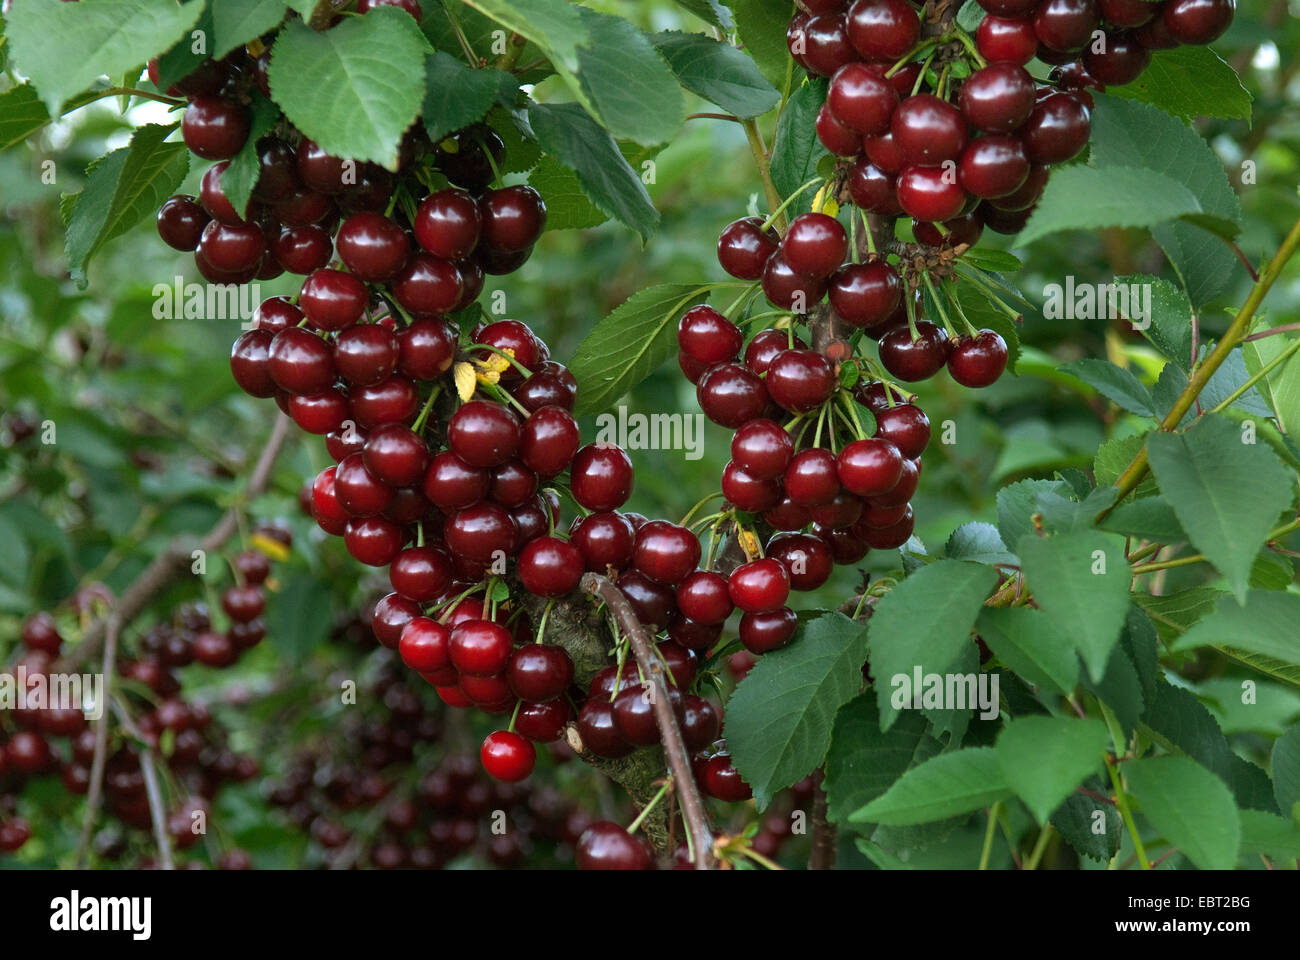 dwarf cherry, morello cherry, sour cherry (Prunus cerasus 'Safir', Prunus cerasus Safir), cultivar Safir Stock Photo